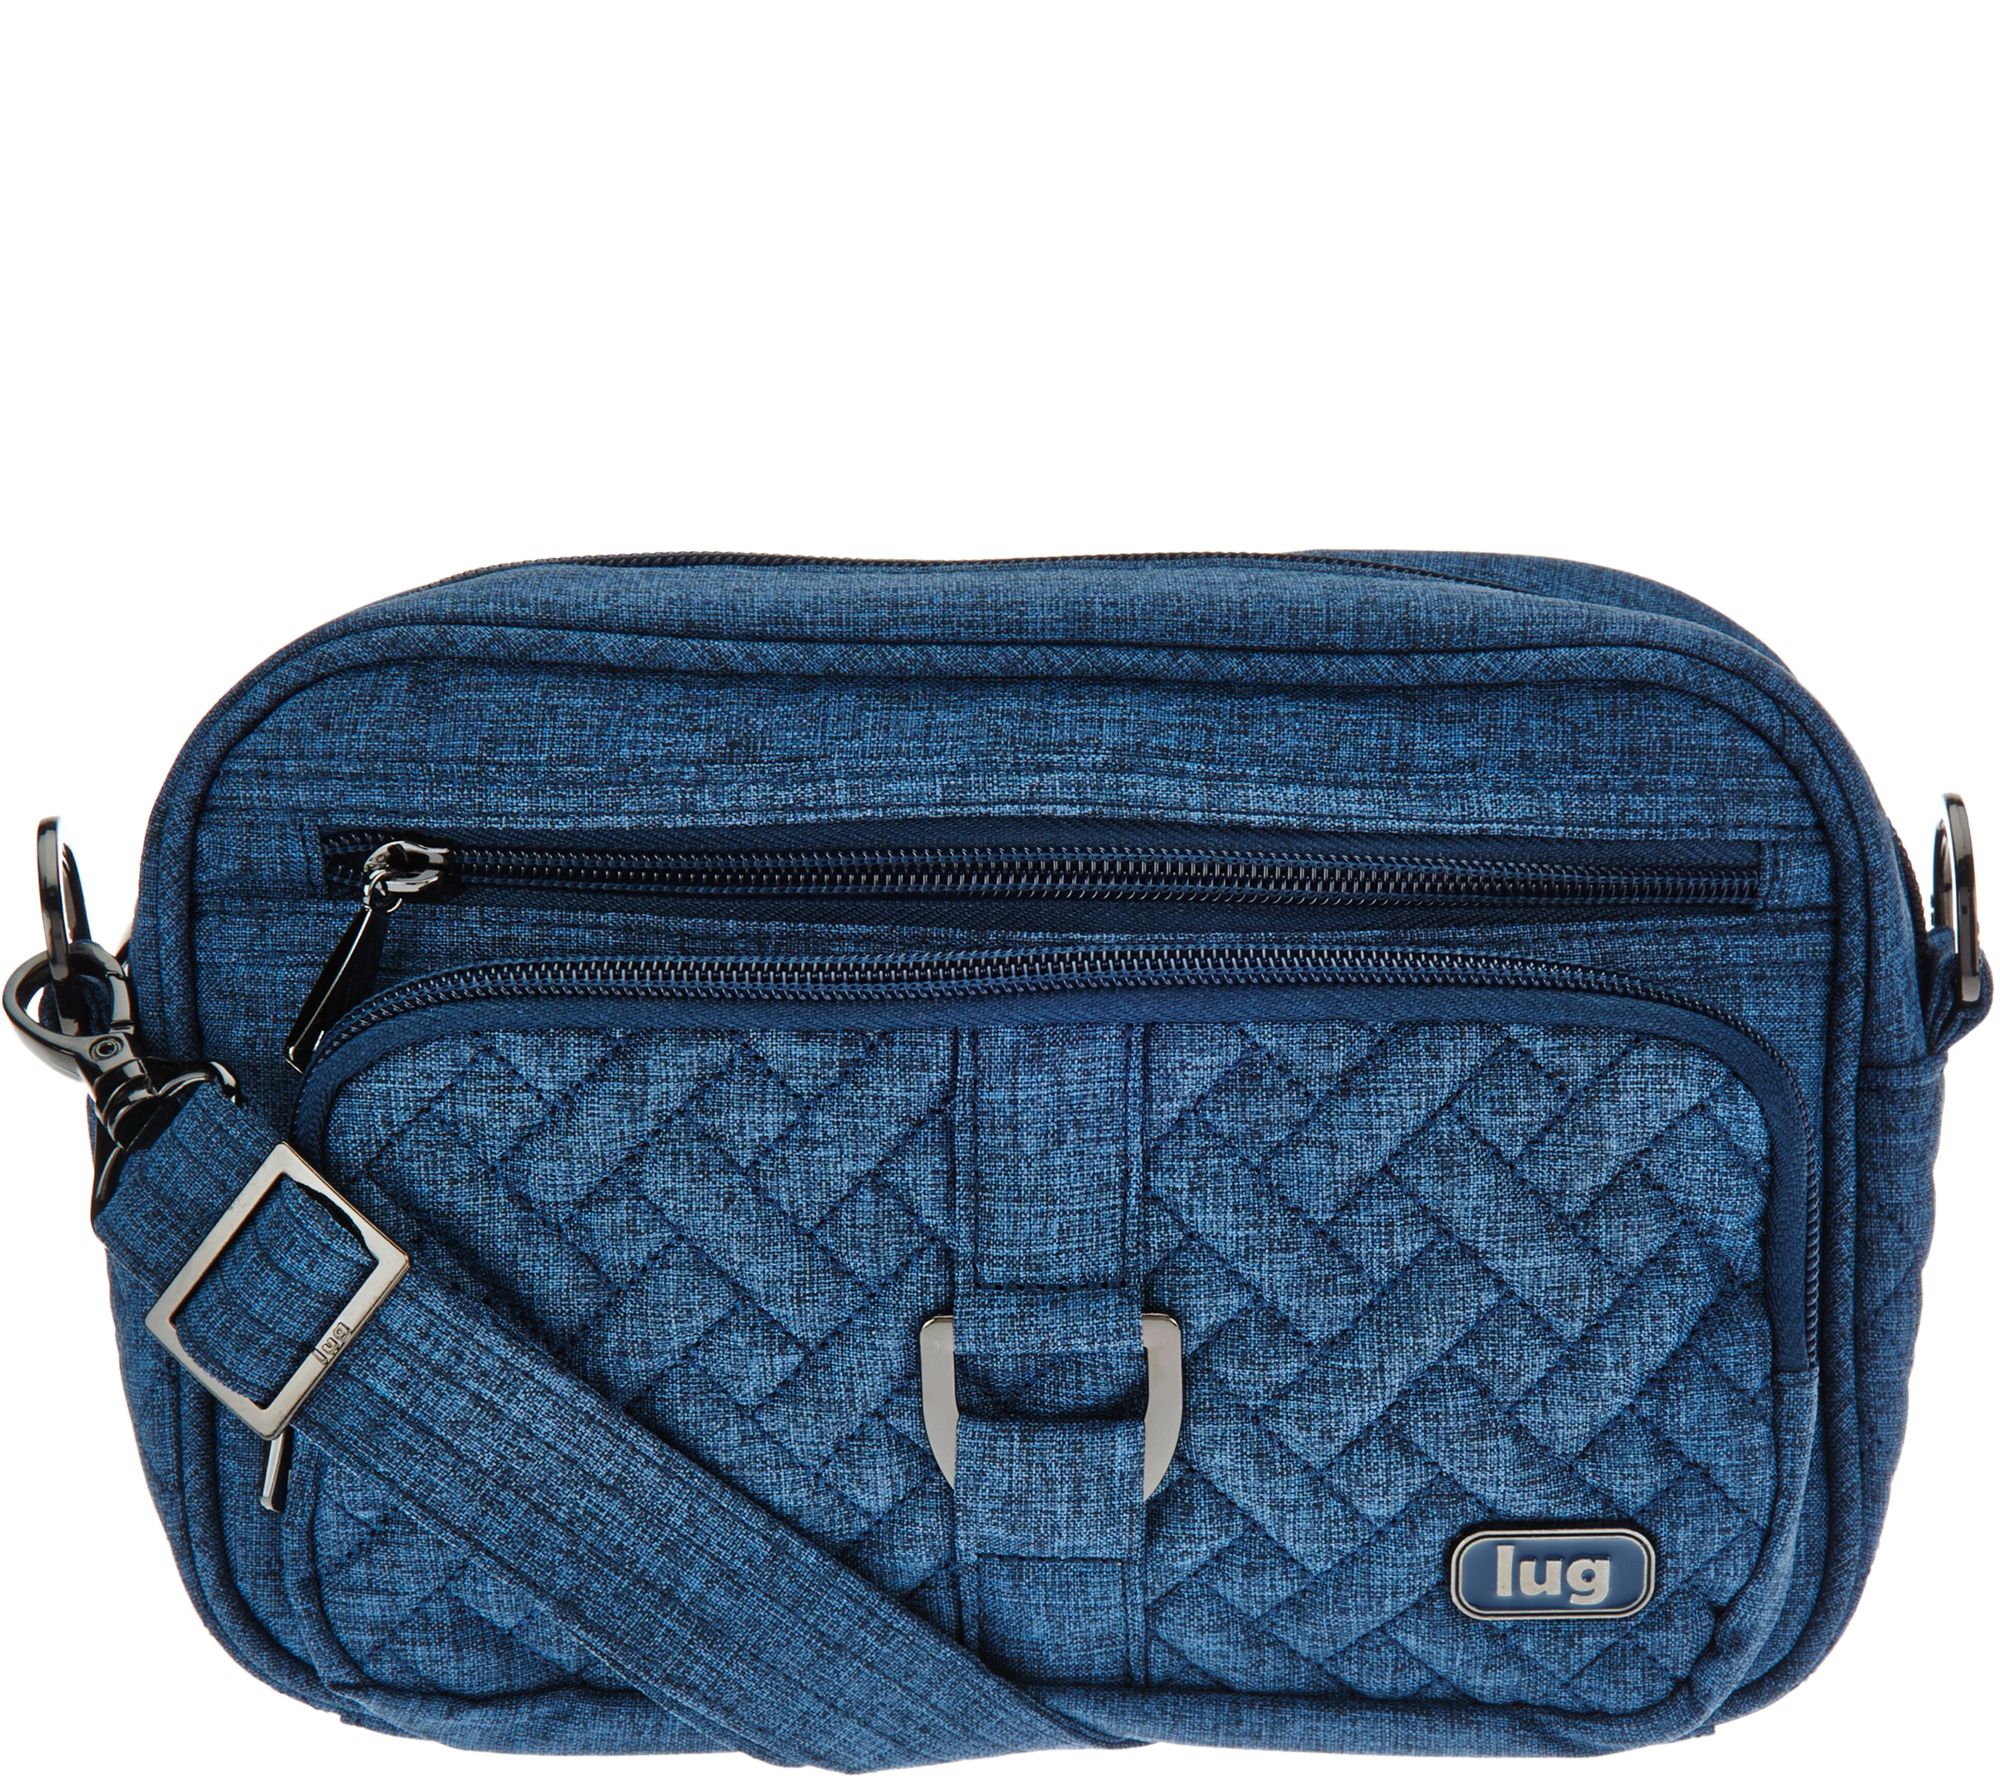 Lug Travel Bags for Women — Handbags & Luggage — www.bagssaleusa.com